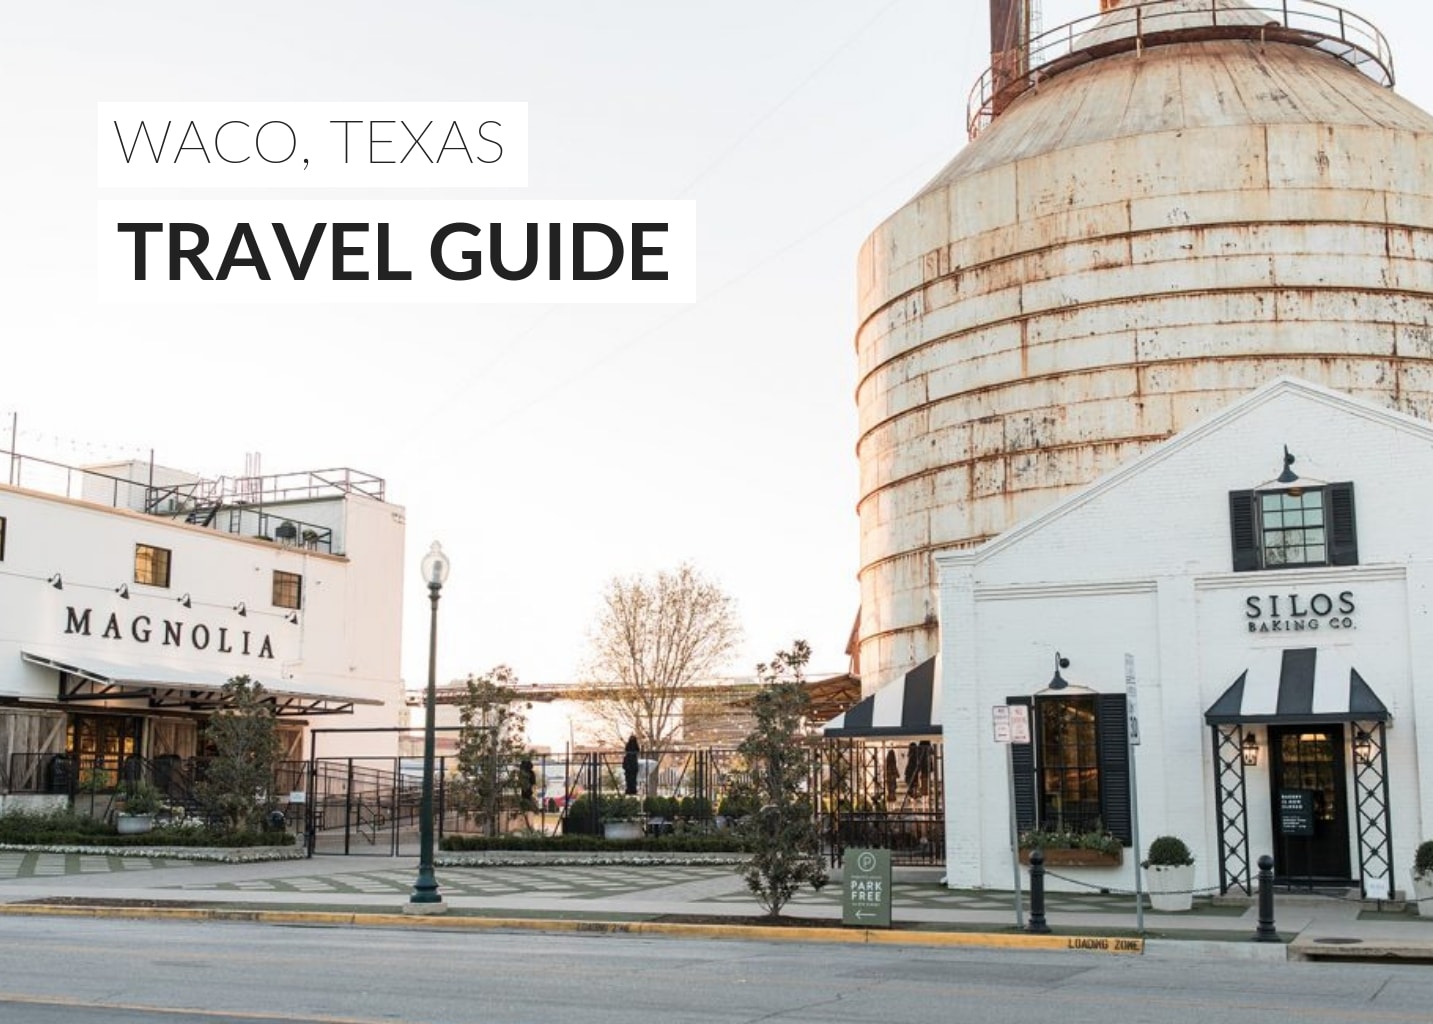 Waco, Texas Travel Guide